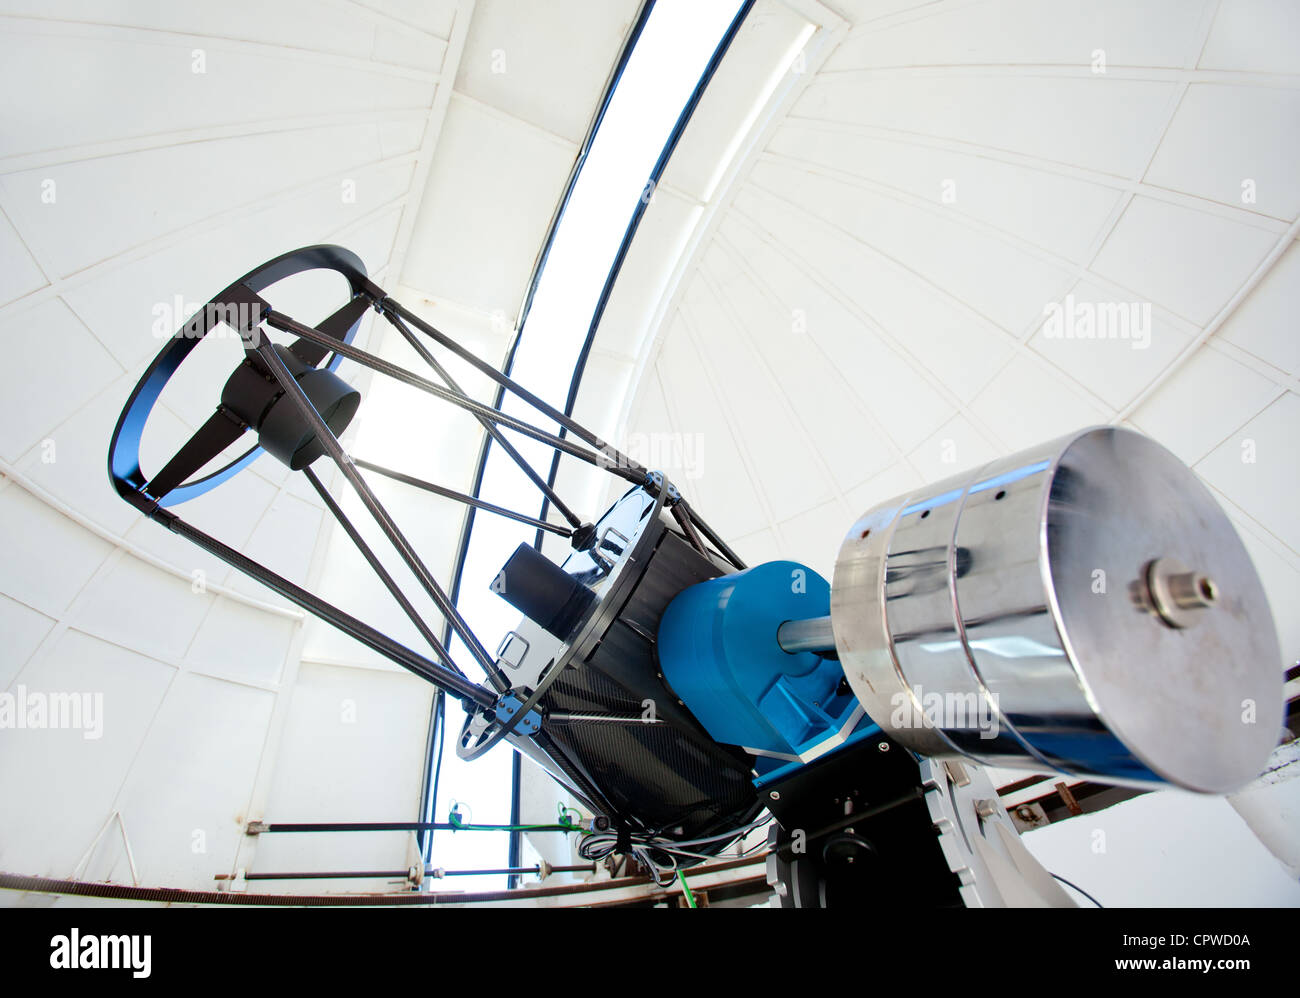 Astronomic observatory telescope inside a white dome Stock Photo